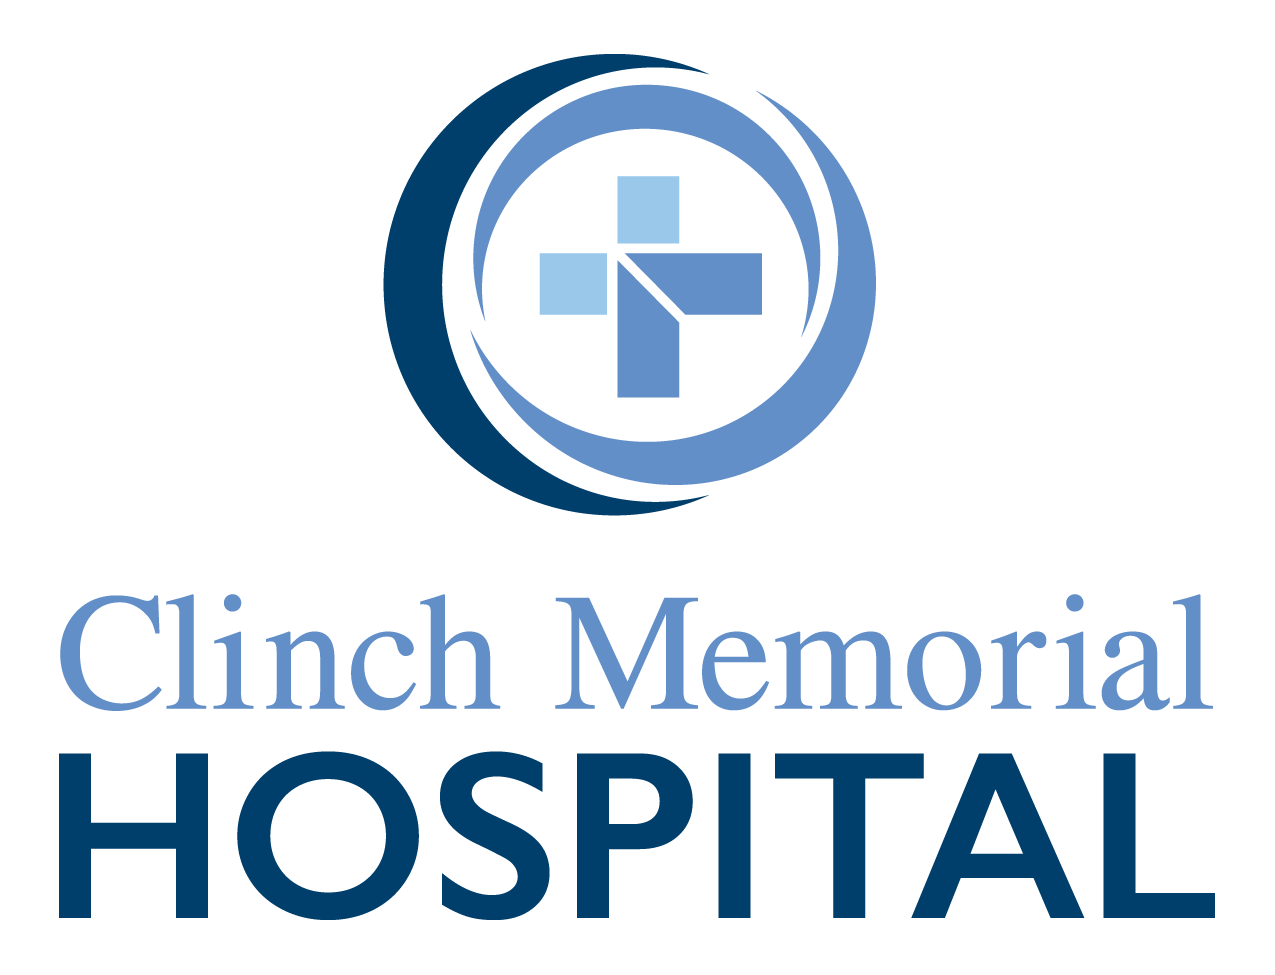 Clinch Memorial Hospital